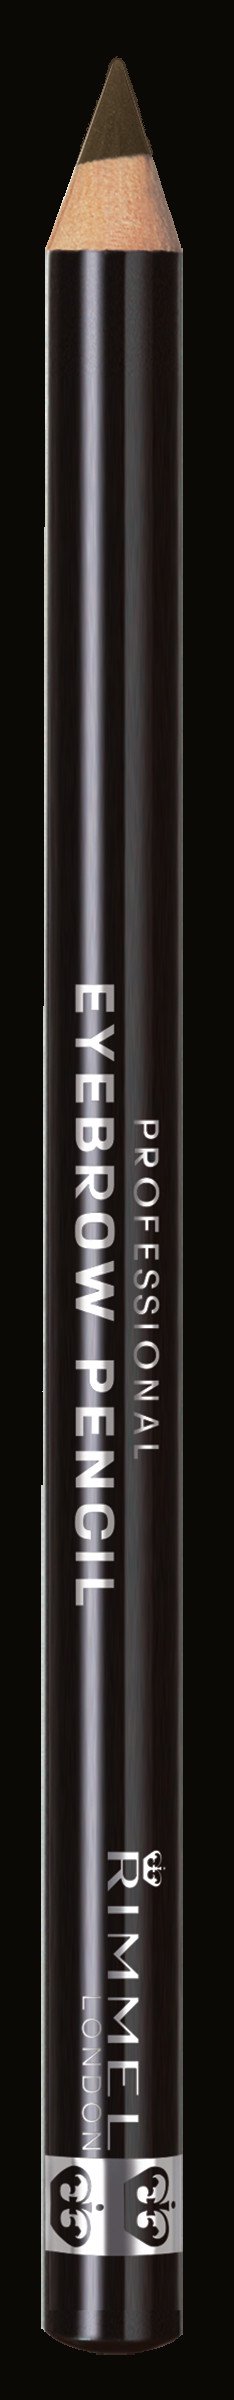 Rimmel Professional Eyebrow Pencil, Dark Brown (Best Cheap Eyebrow Pencil)